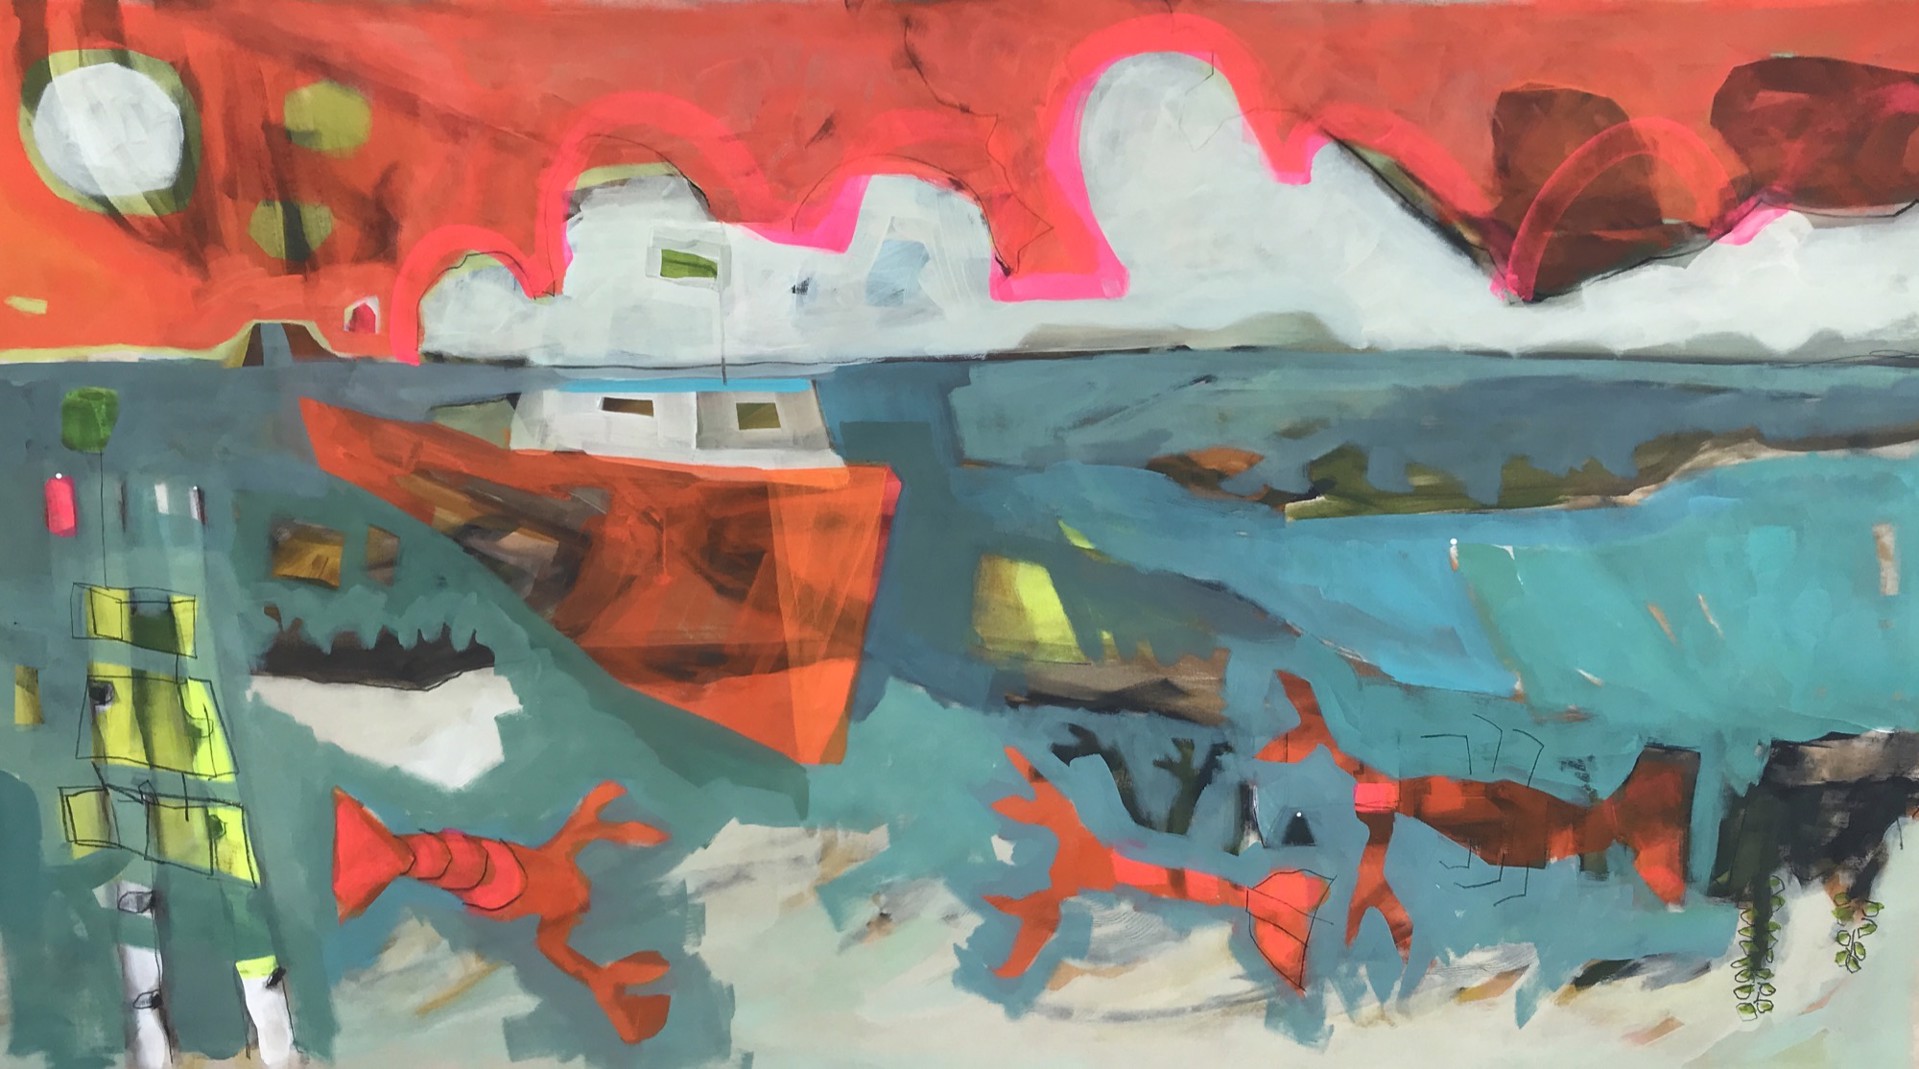 Mr. Pinkham's Lobster Boat by Rachael Van Dyke